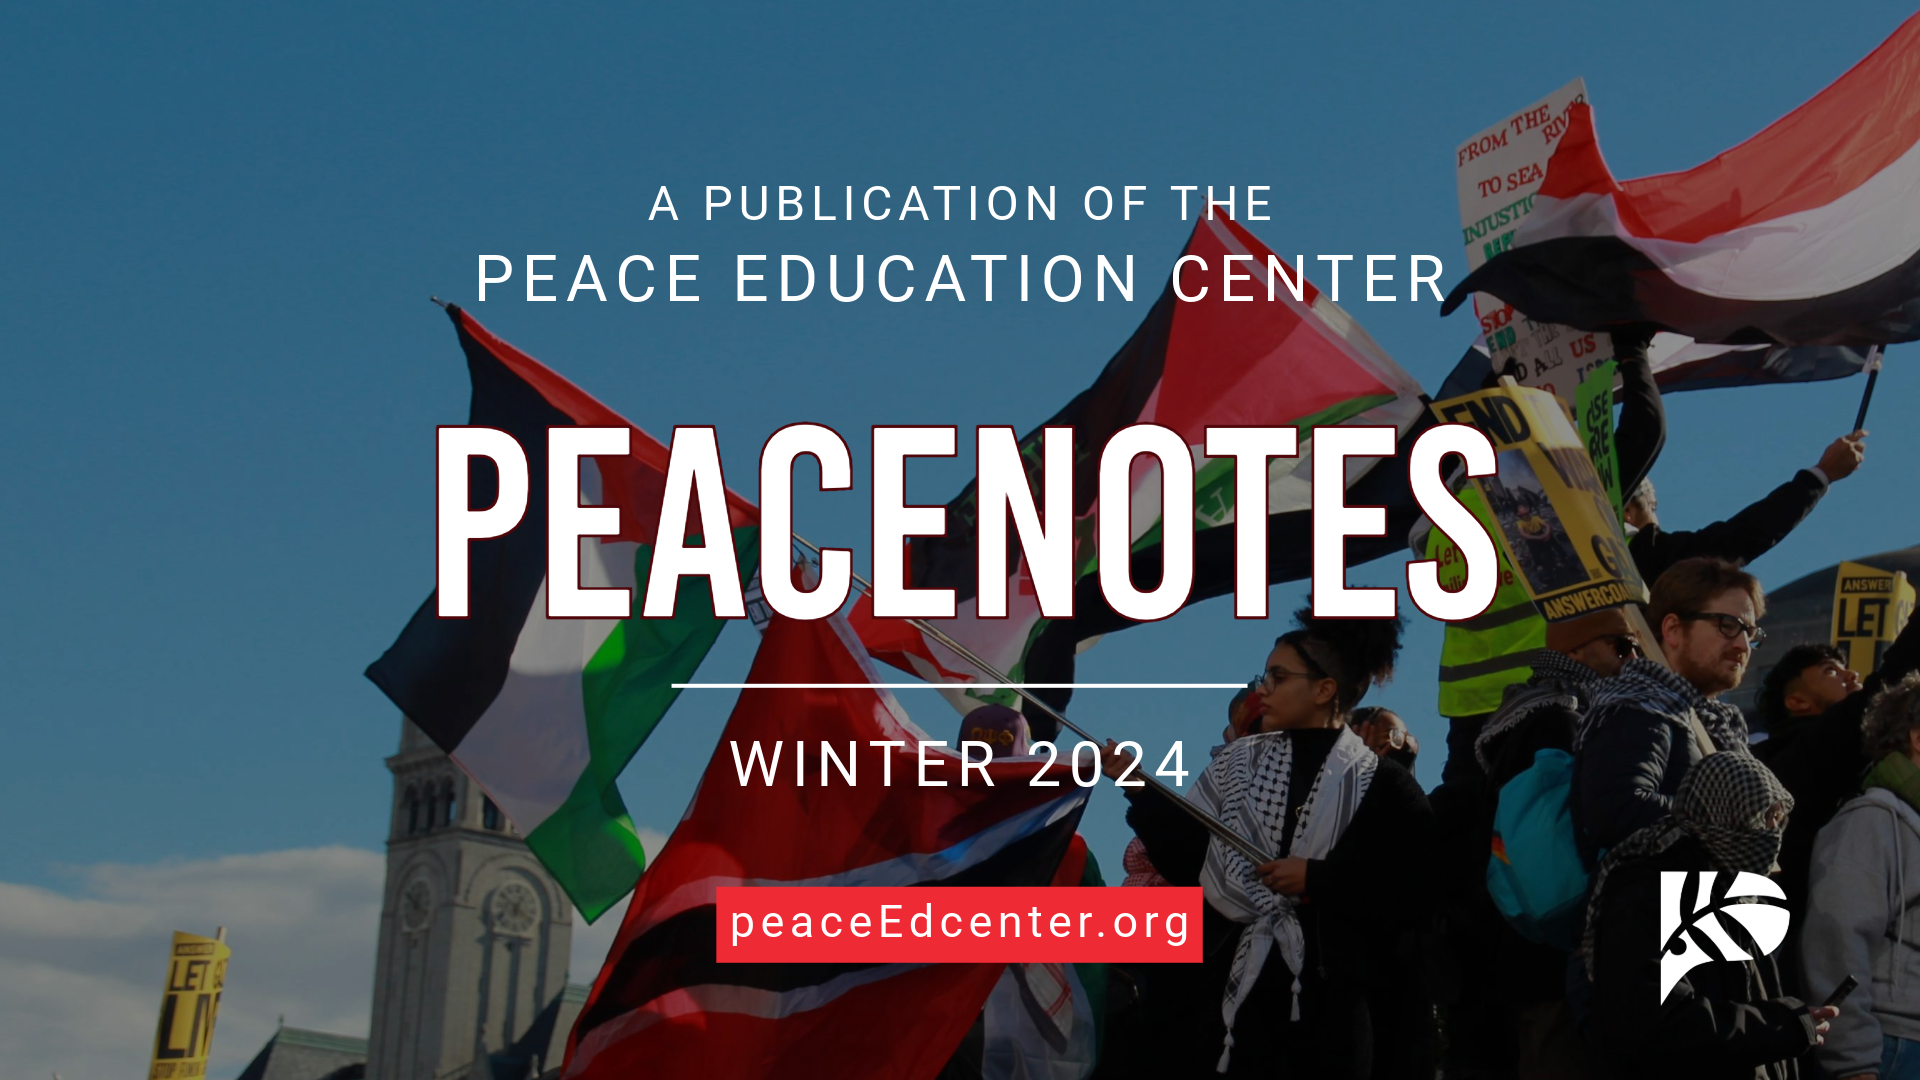 PeaceNotes Winter 2024